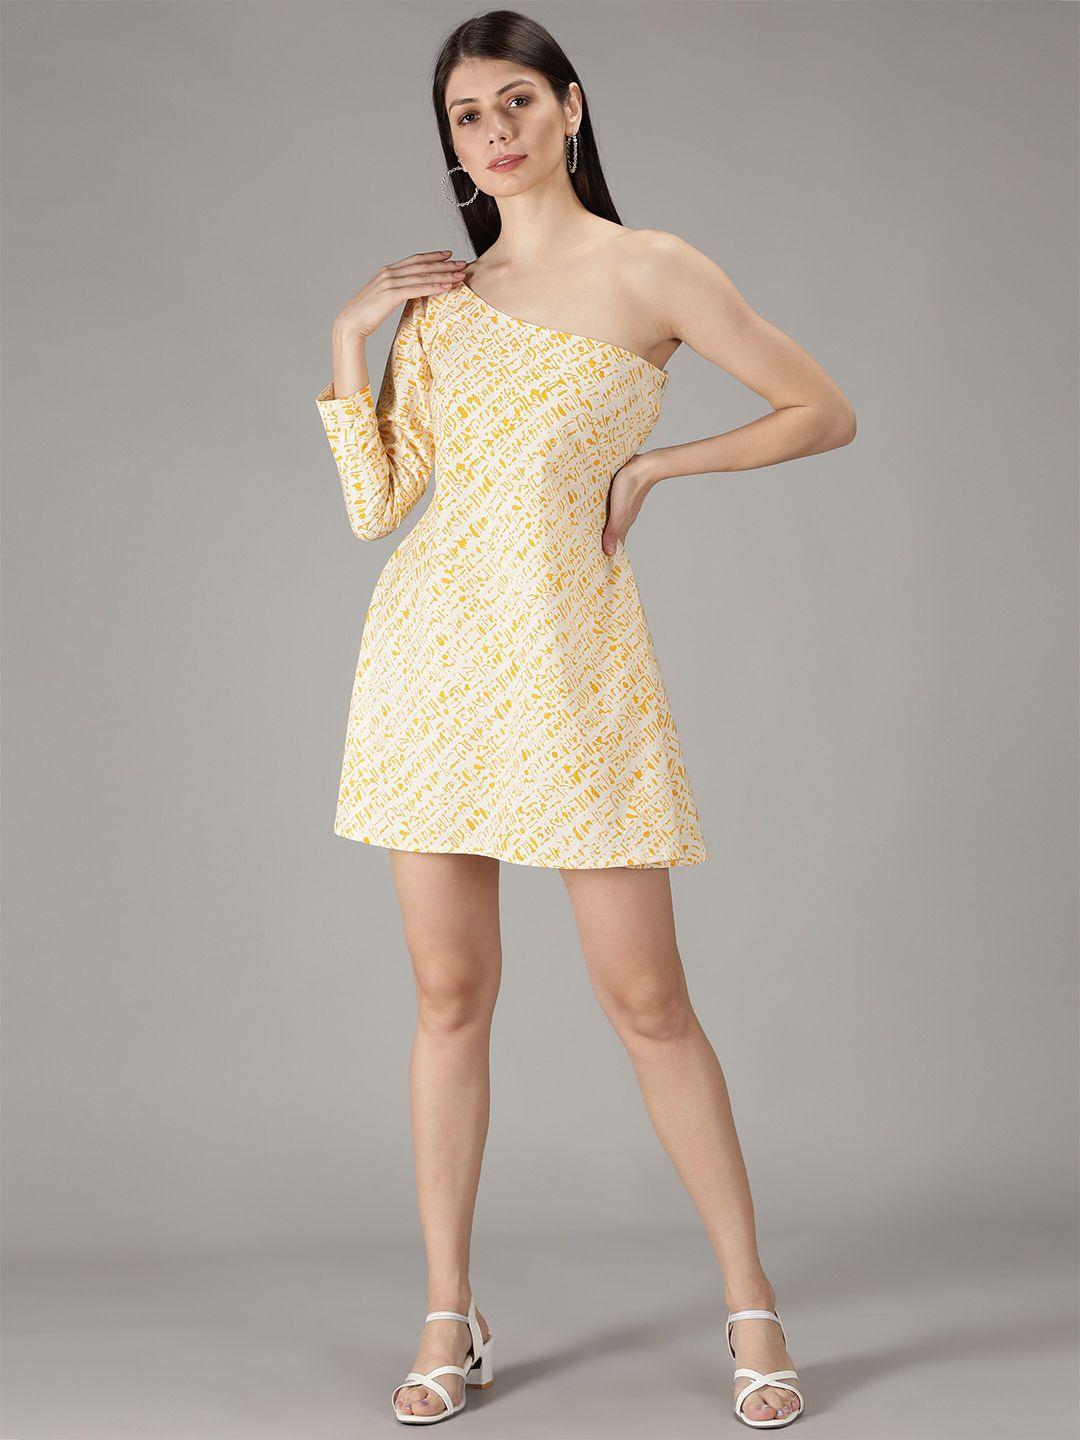 sajke off white & yellow one shoulder a-line mini dress